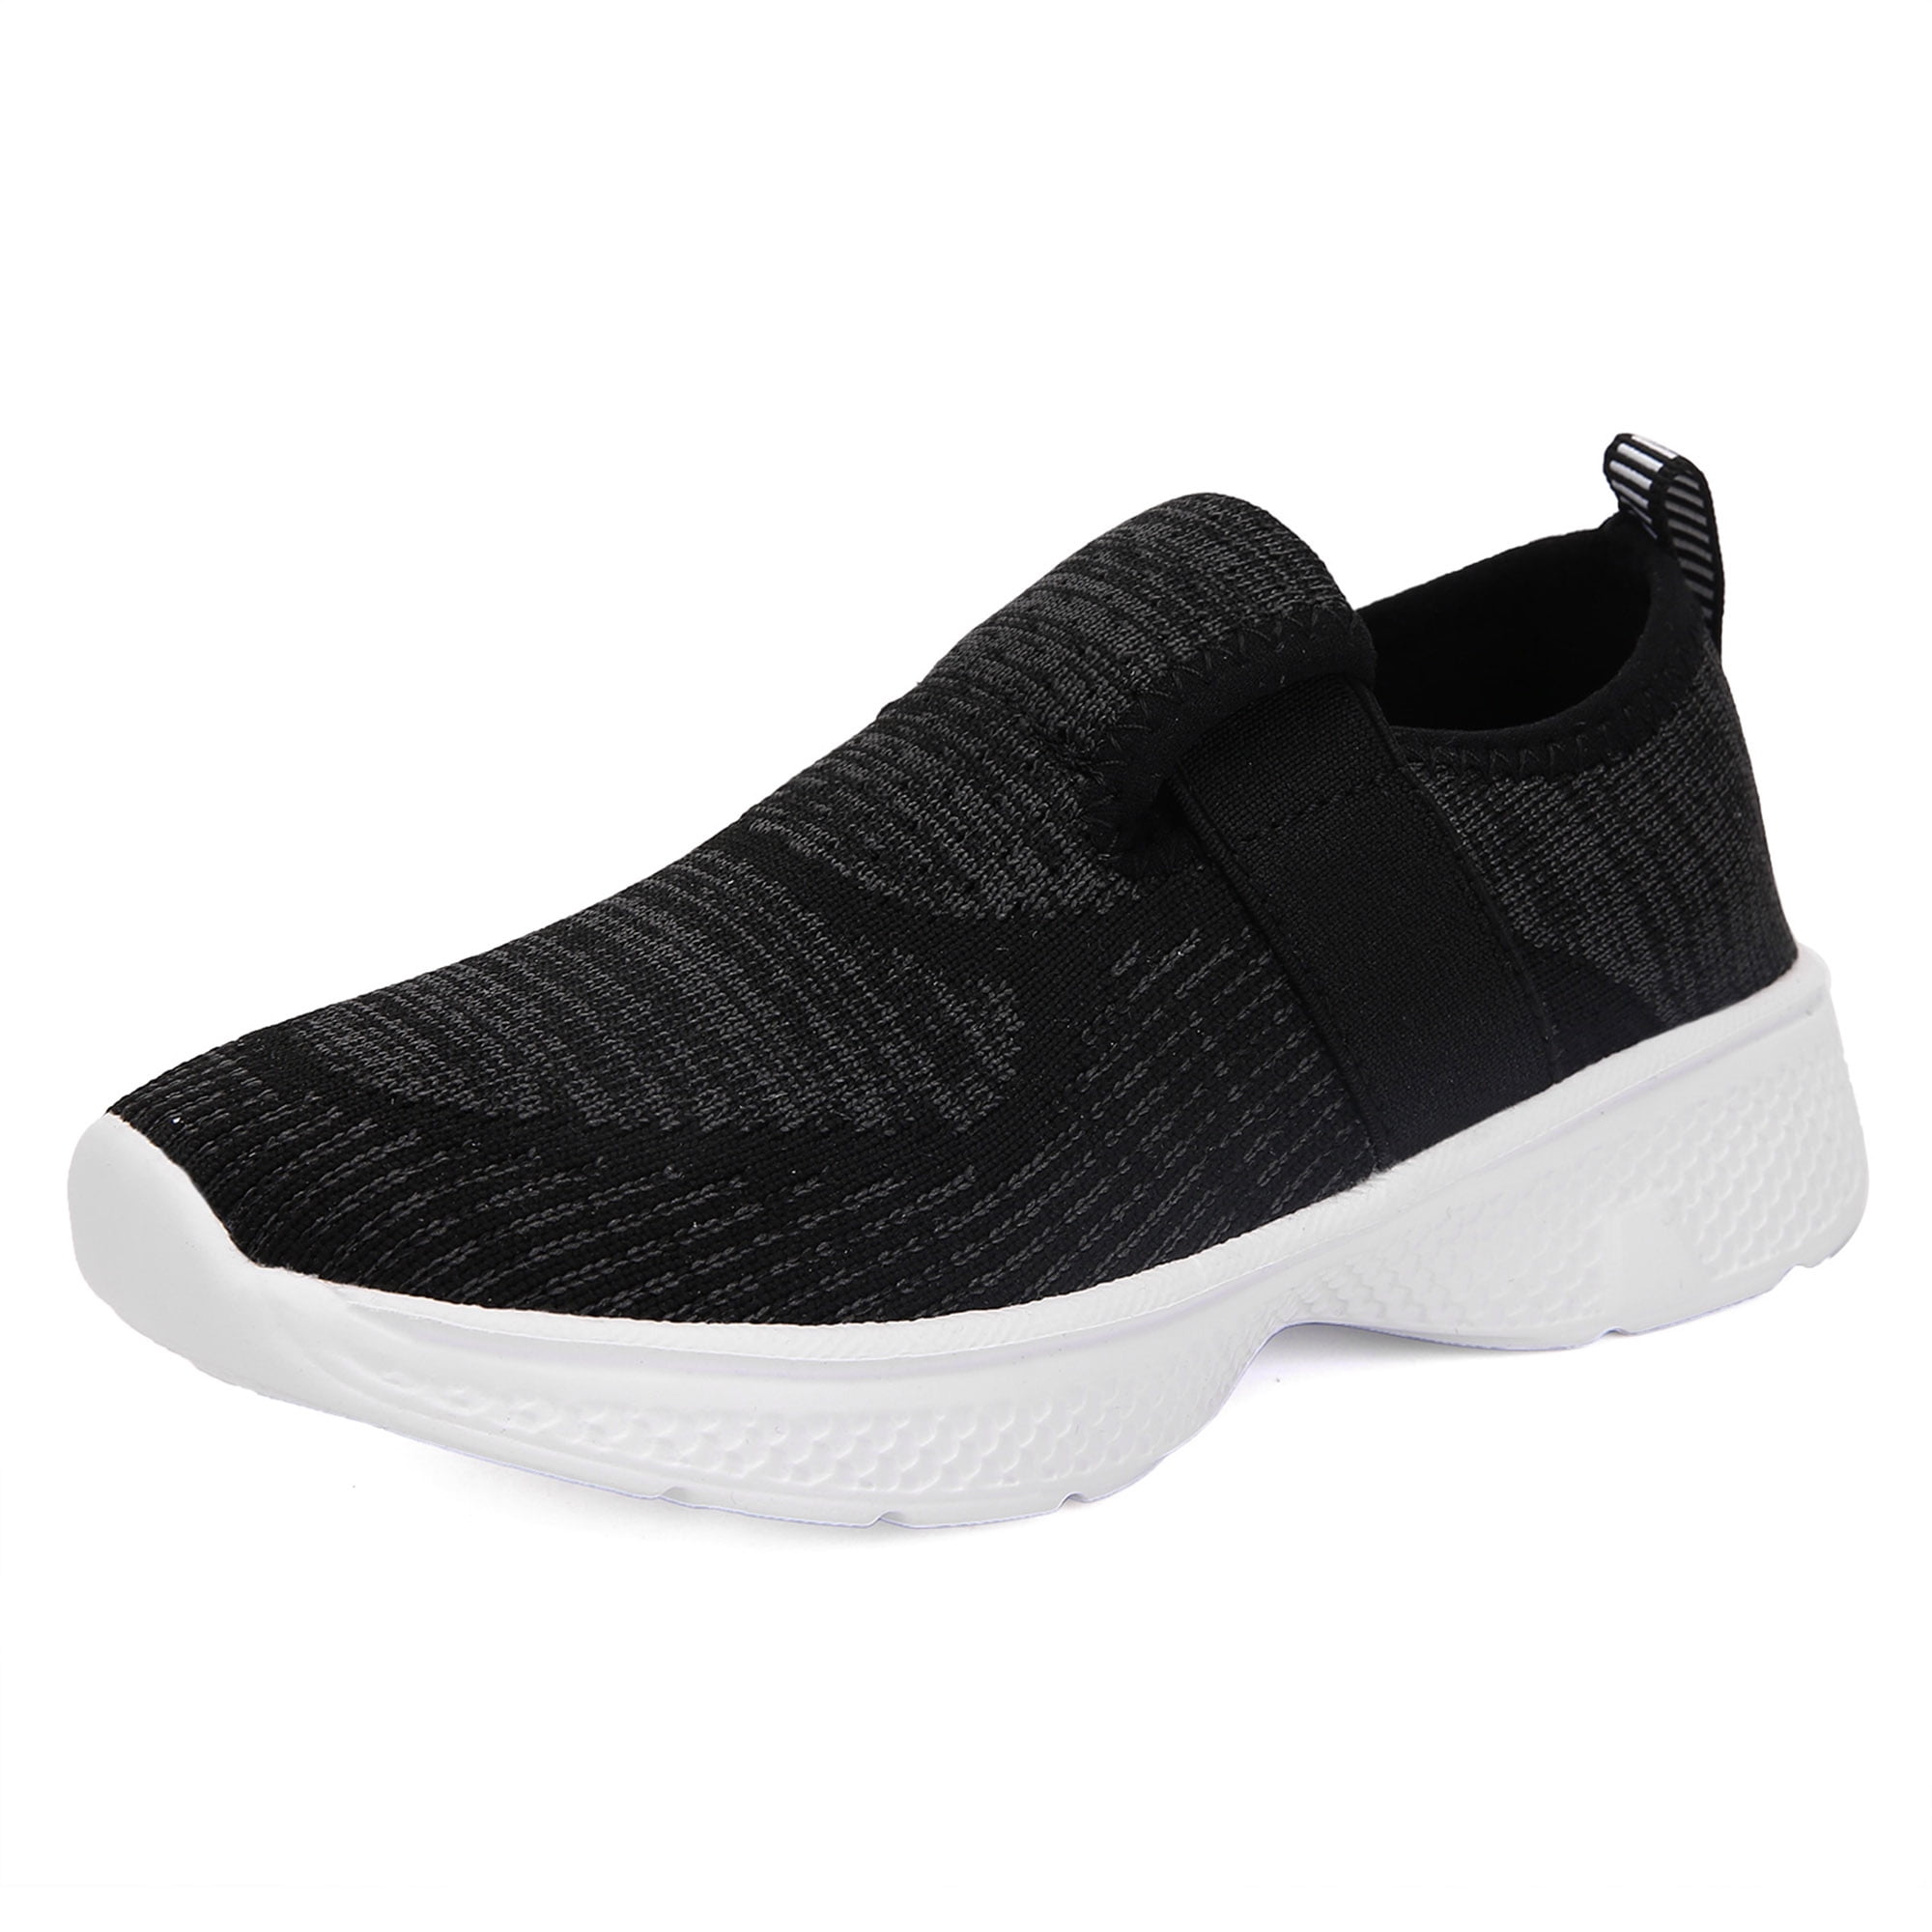 ReverseClock Kids Sneaker Lightweight Slip on Black Running Shoes Size ...